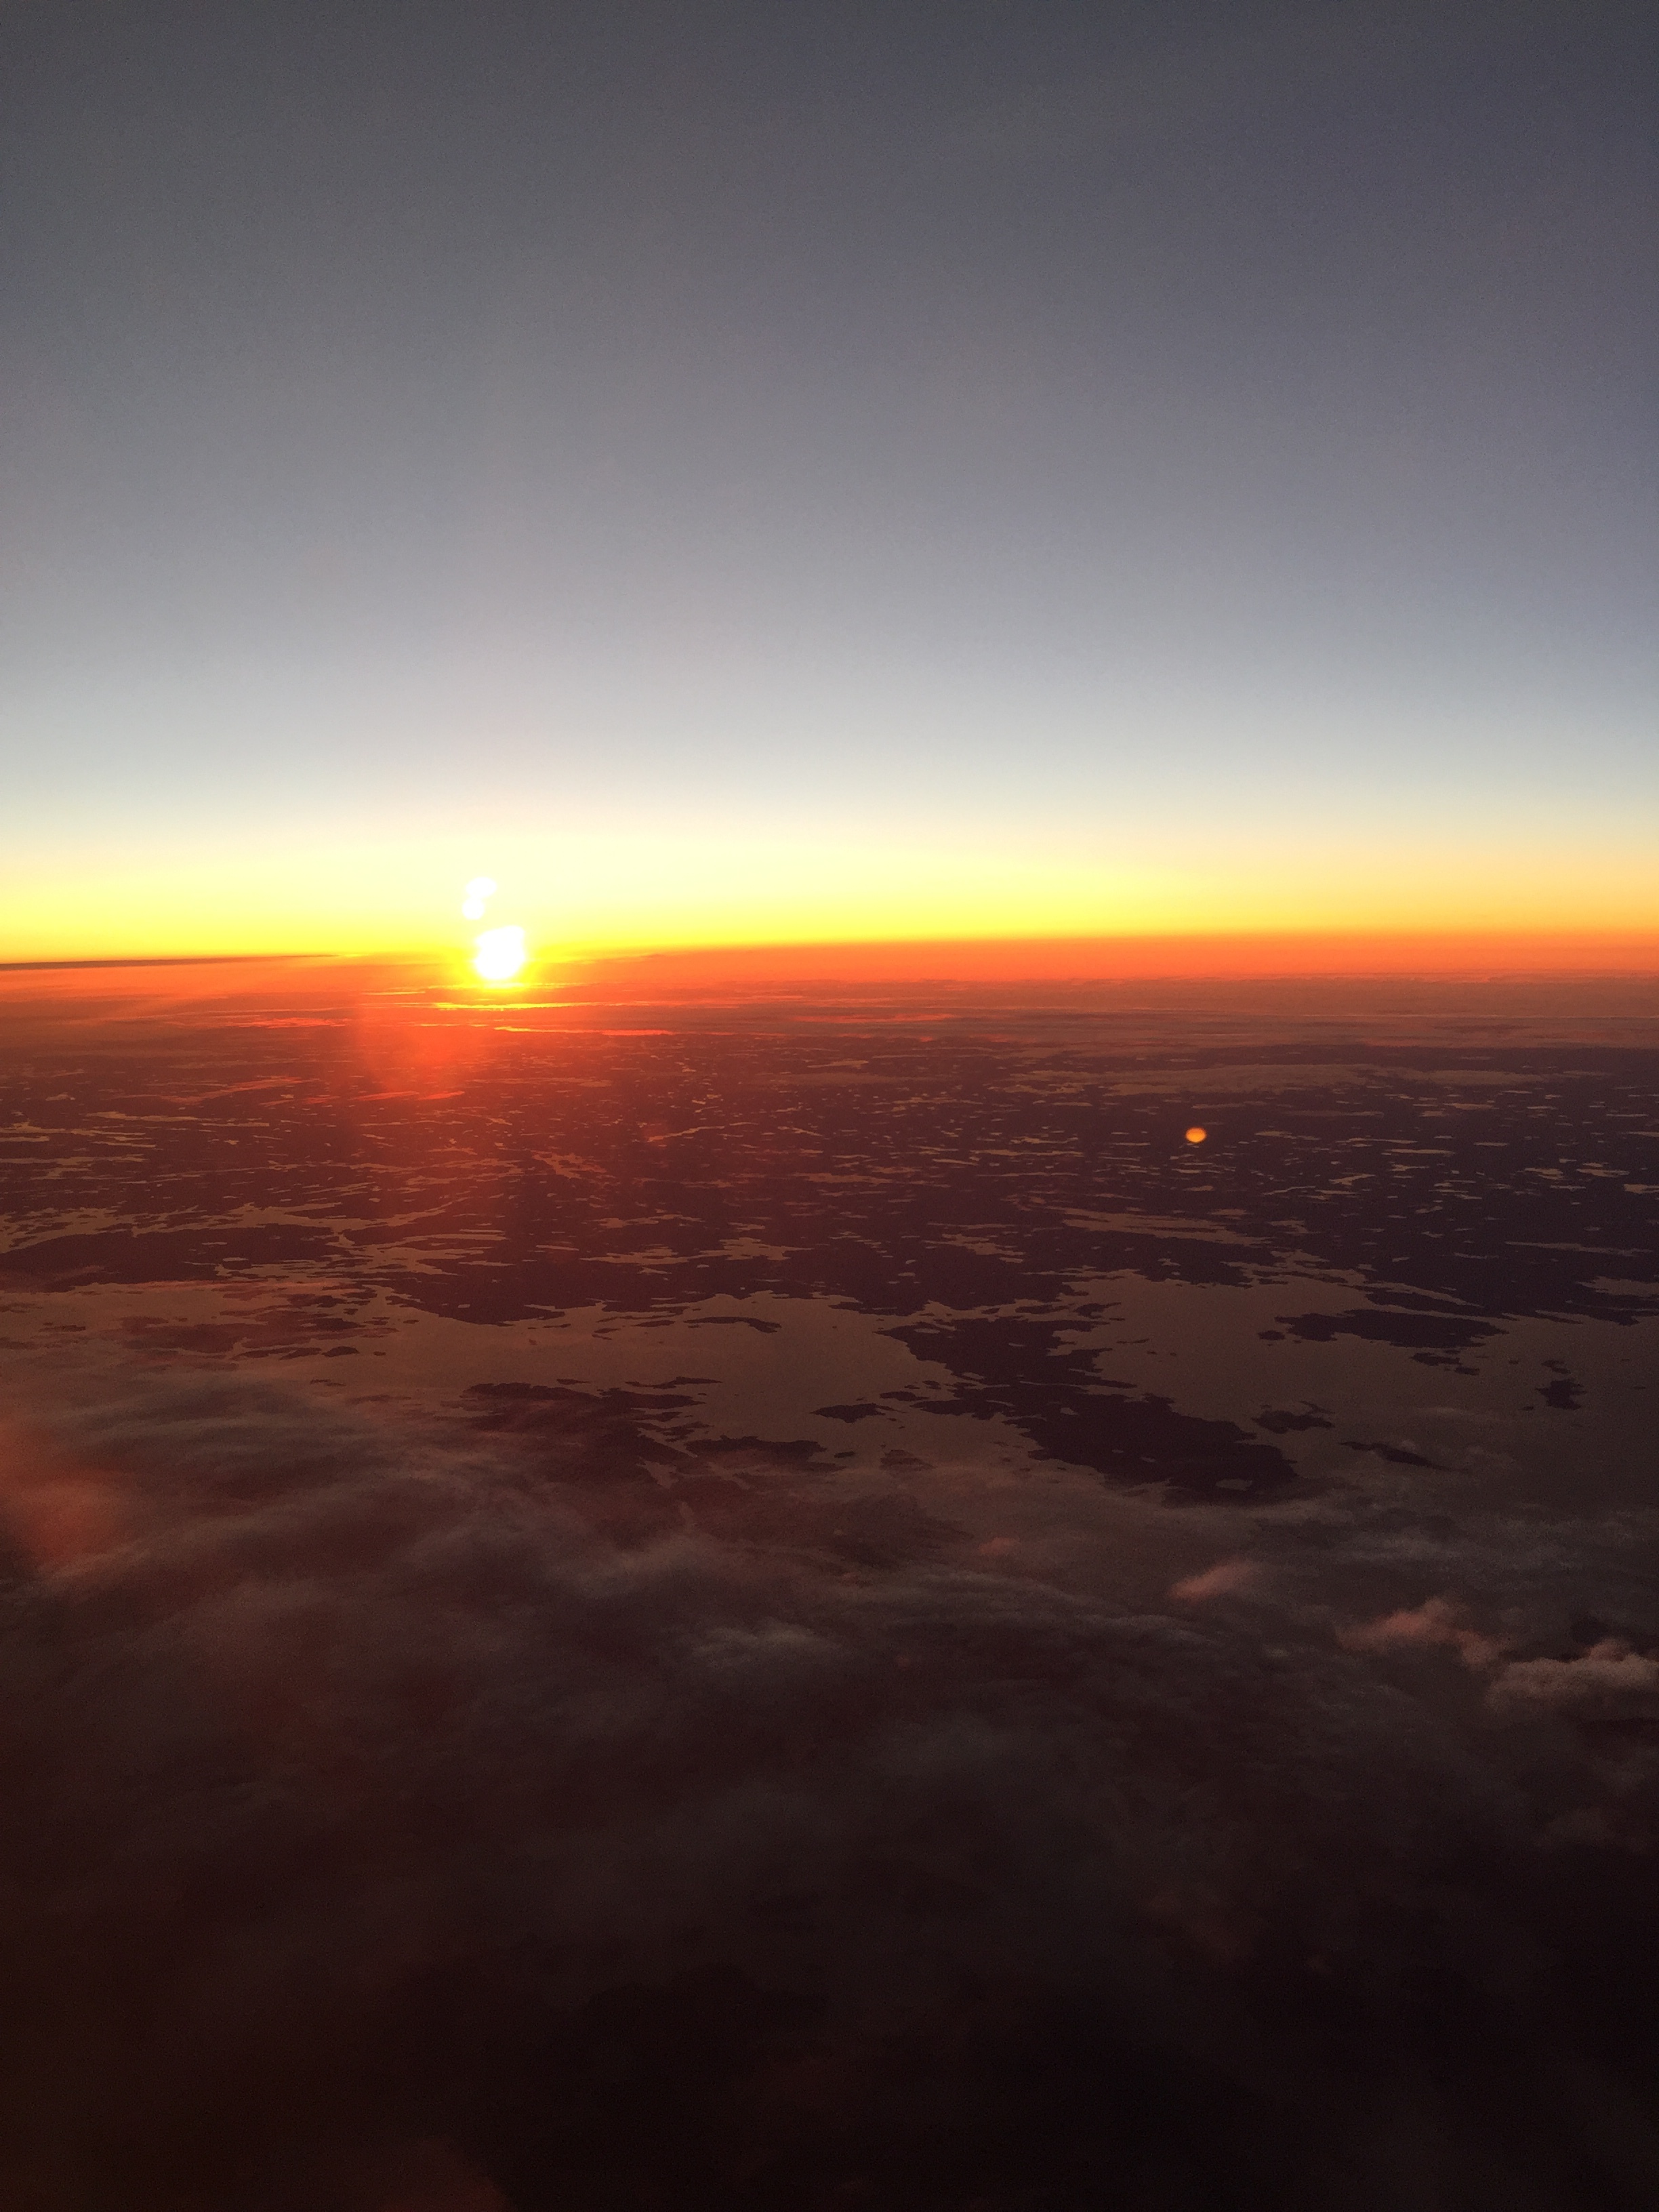 Sunrise on the way to Paris